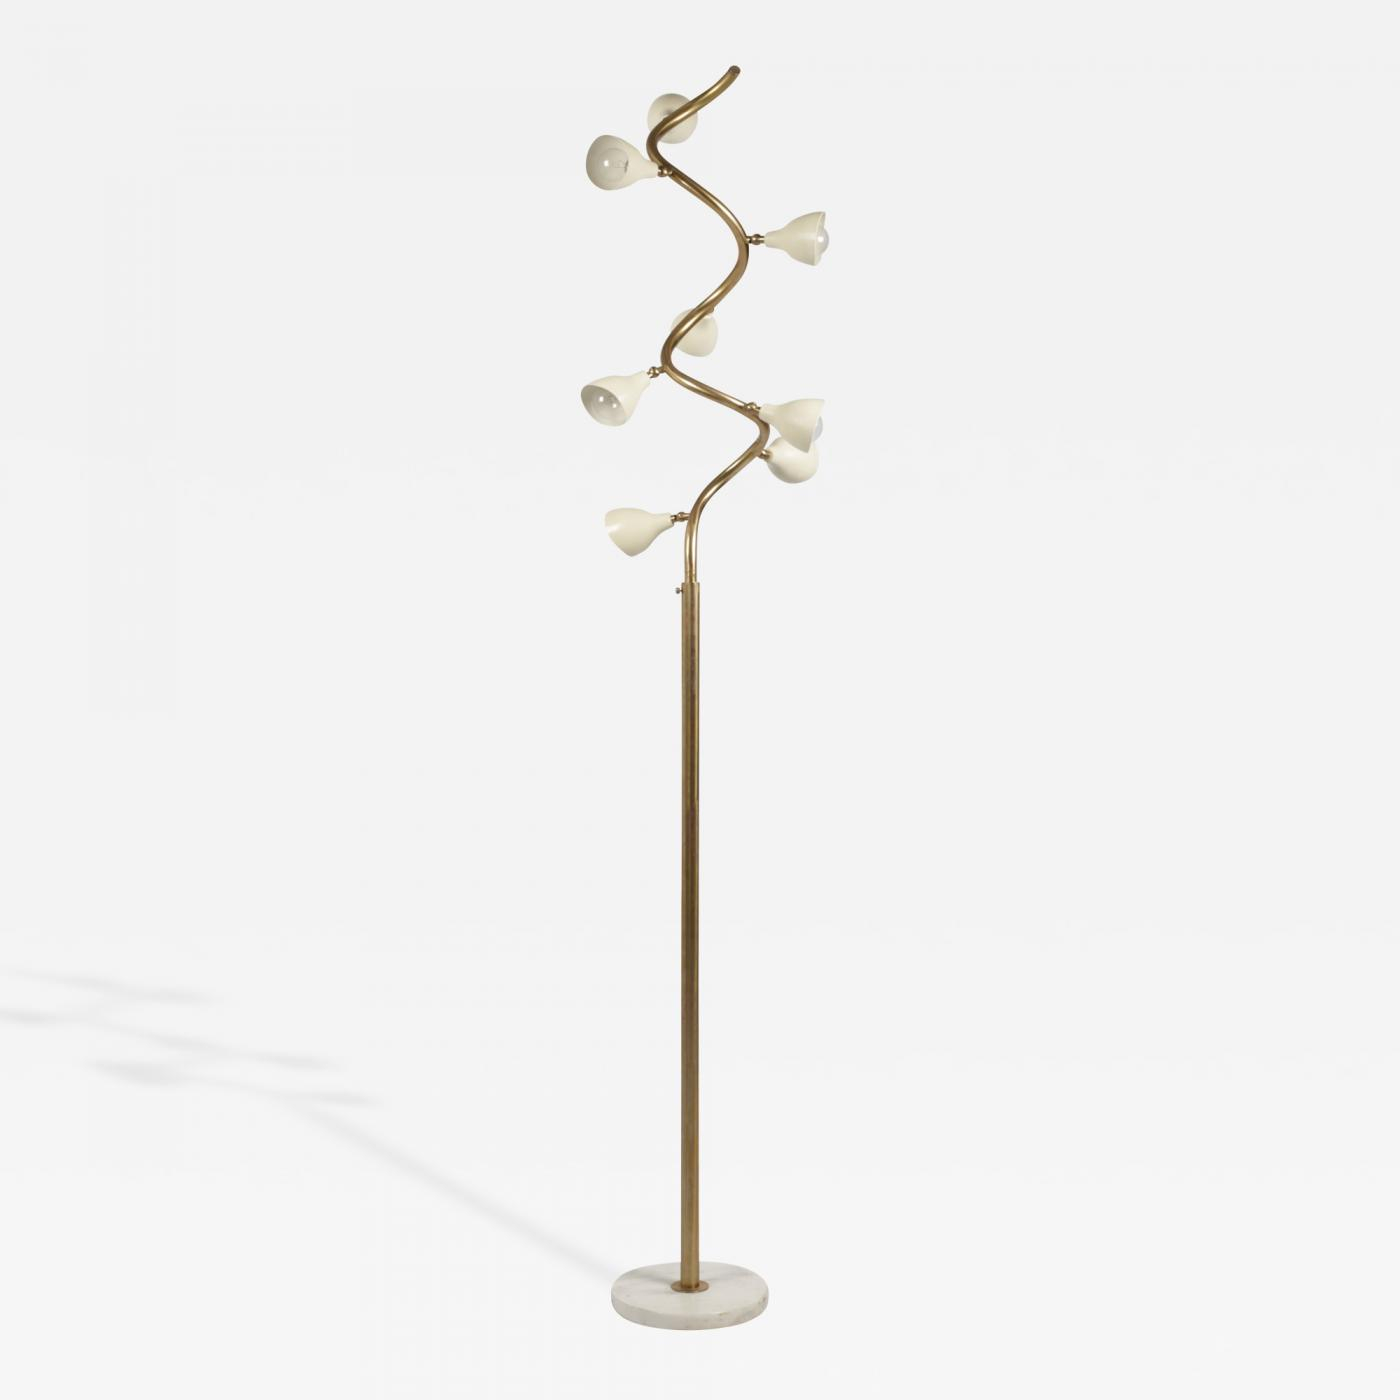 Gino Sarfatti Gino Sarfatti Style Spiral Floor Lamp With White Marble Base in sizing 1400 X 1400